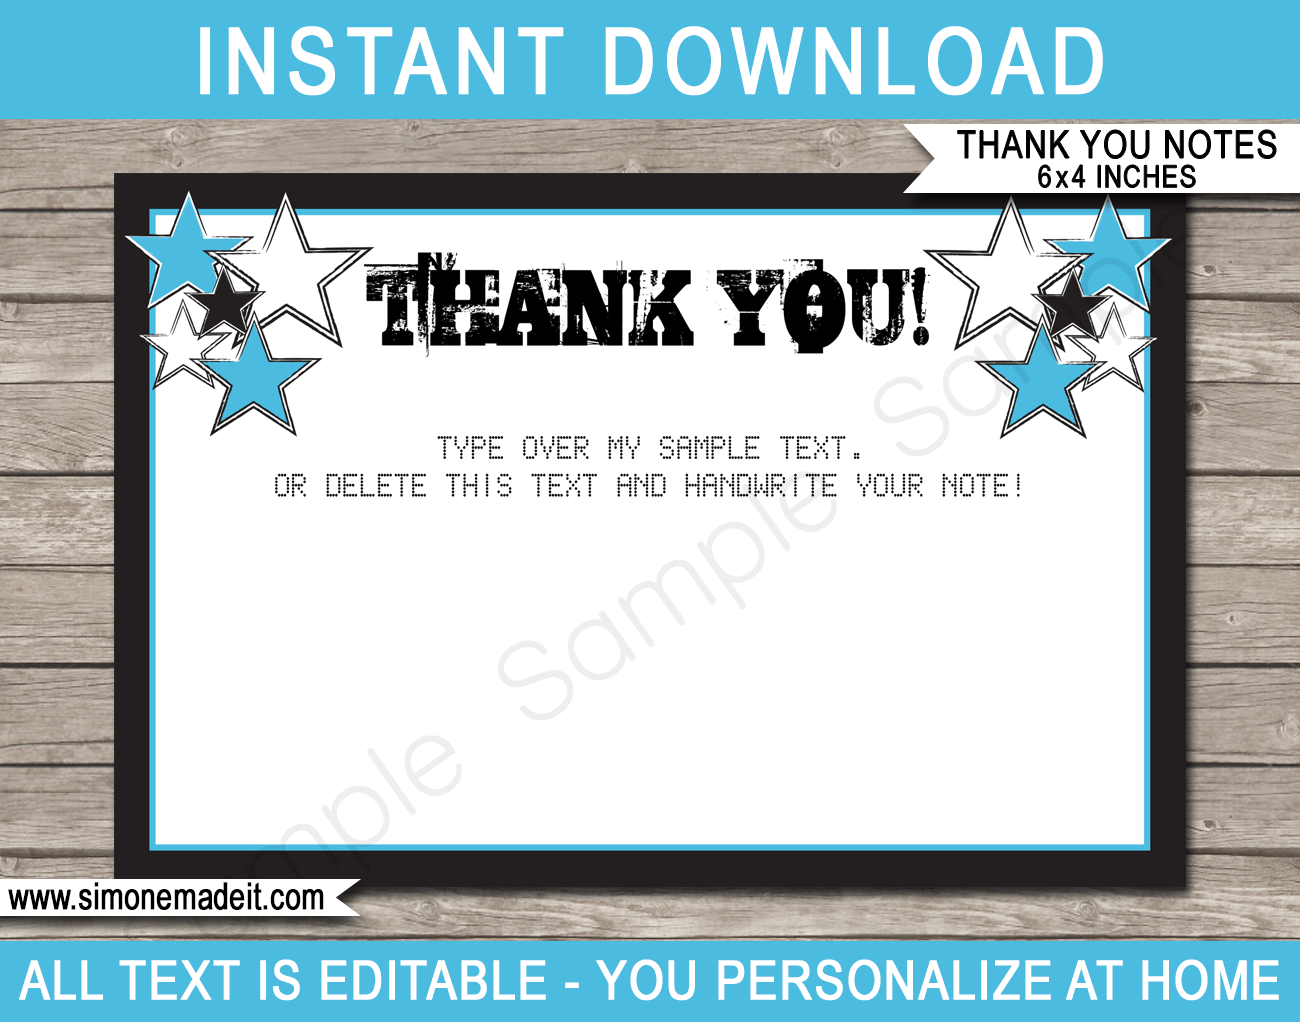 Printable Rockstar Birthday Party Thank You Cards Template - Favor Tags - Karaoke theme - Editable Text - Instant Download via simonemadeit.com